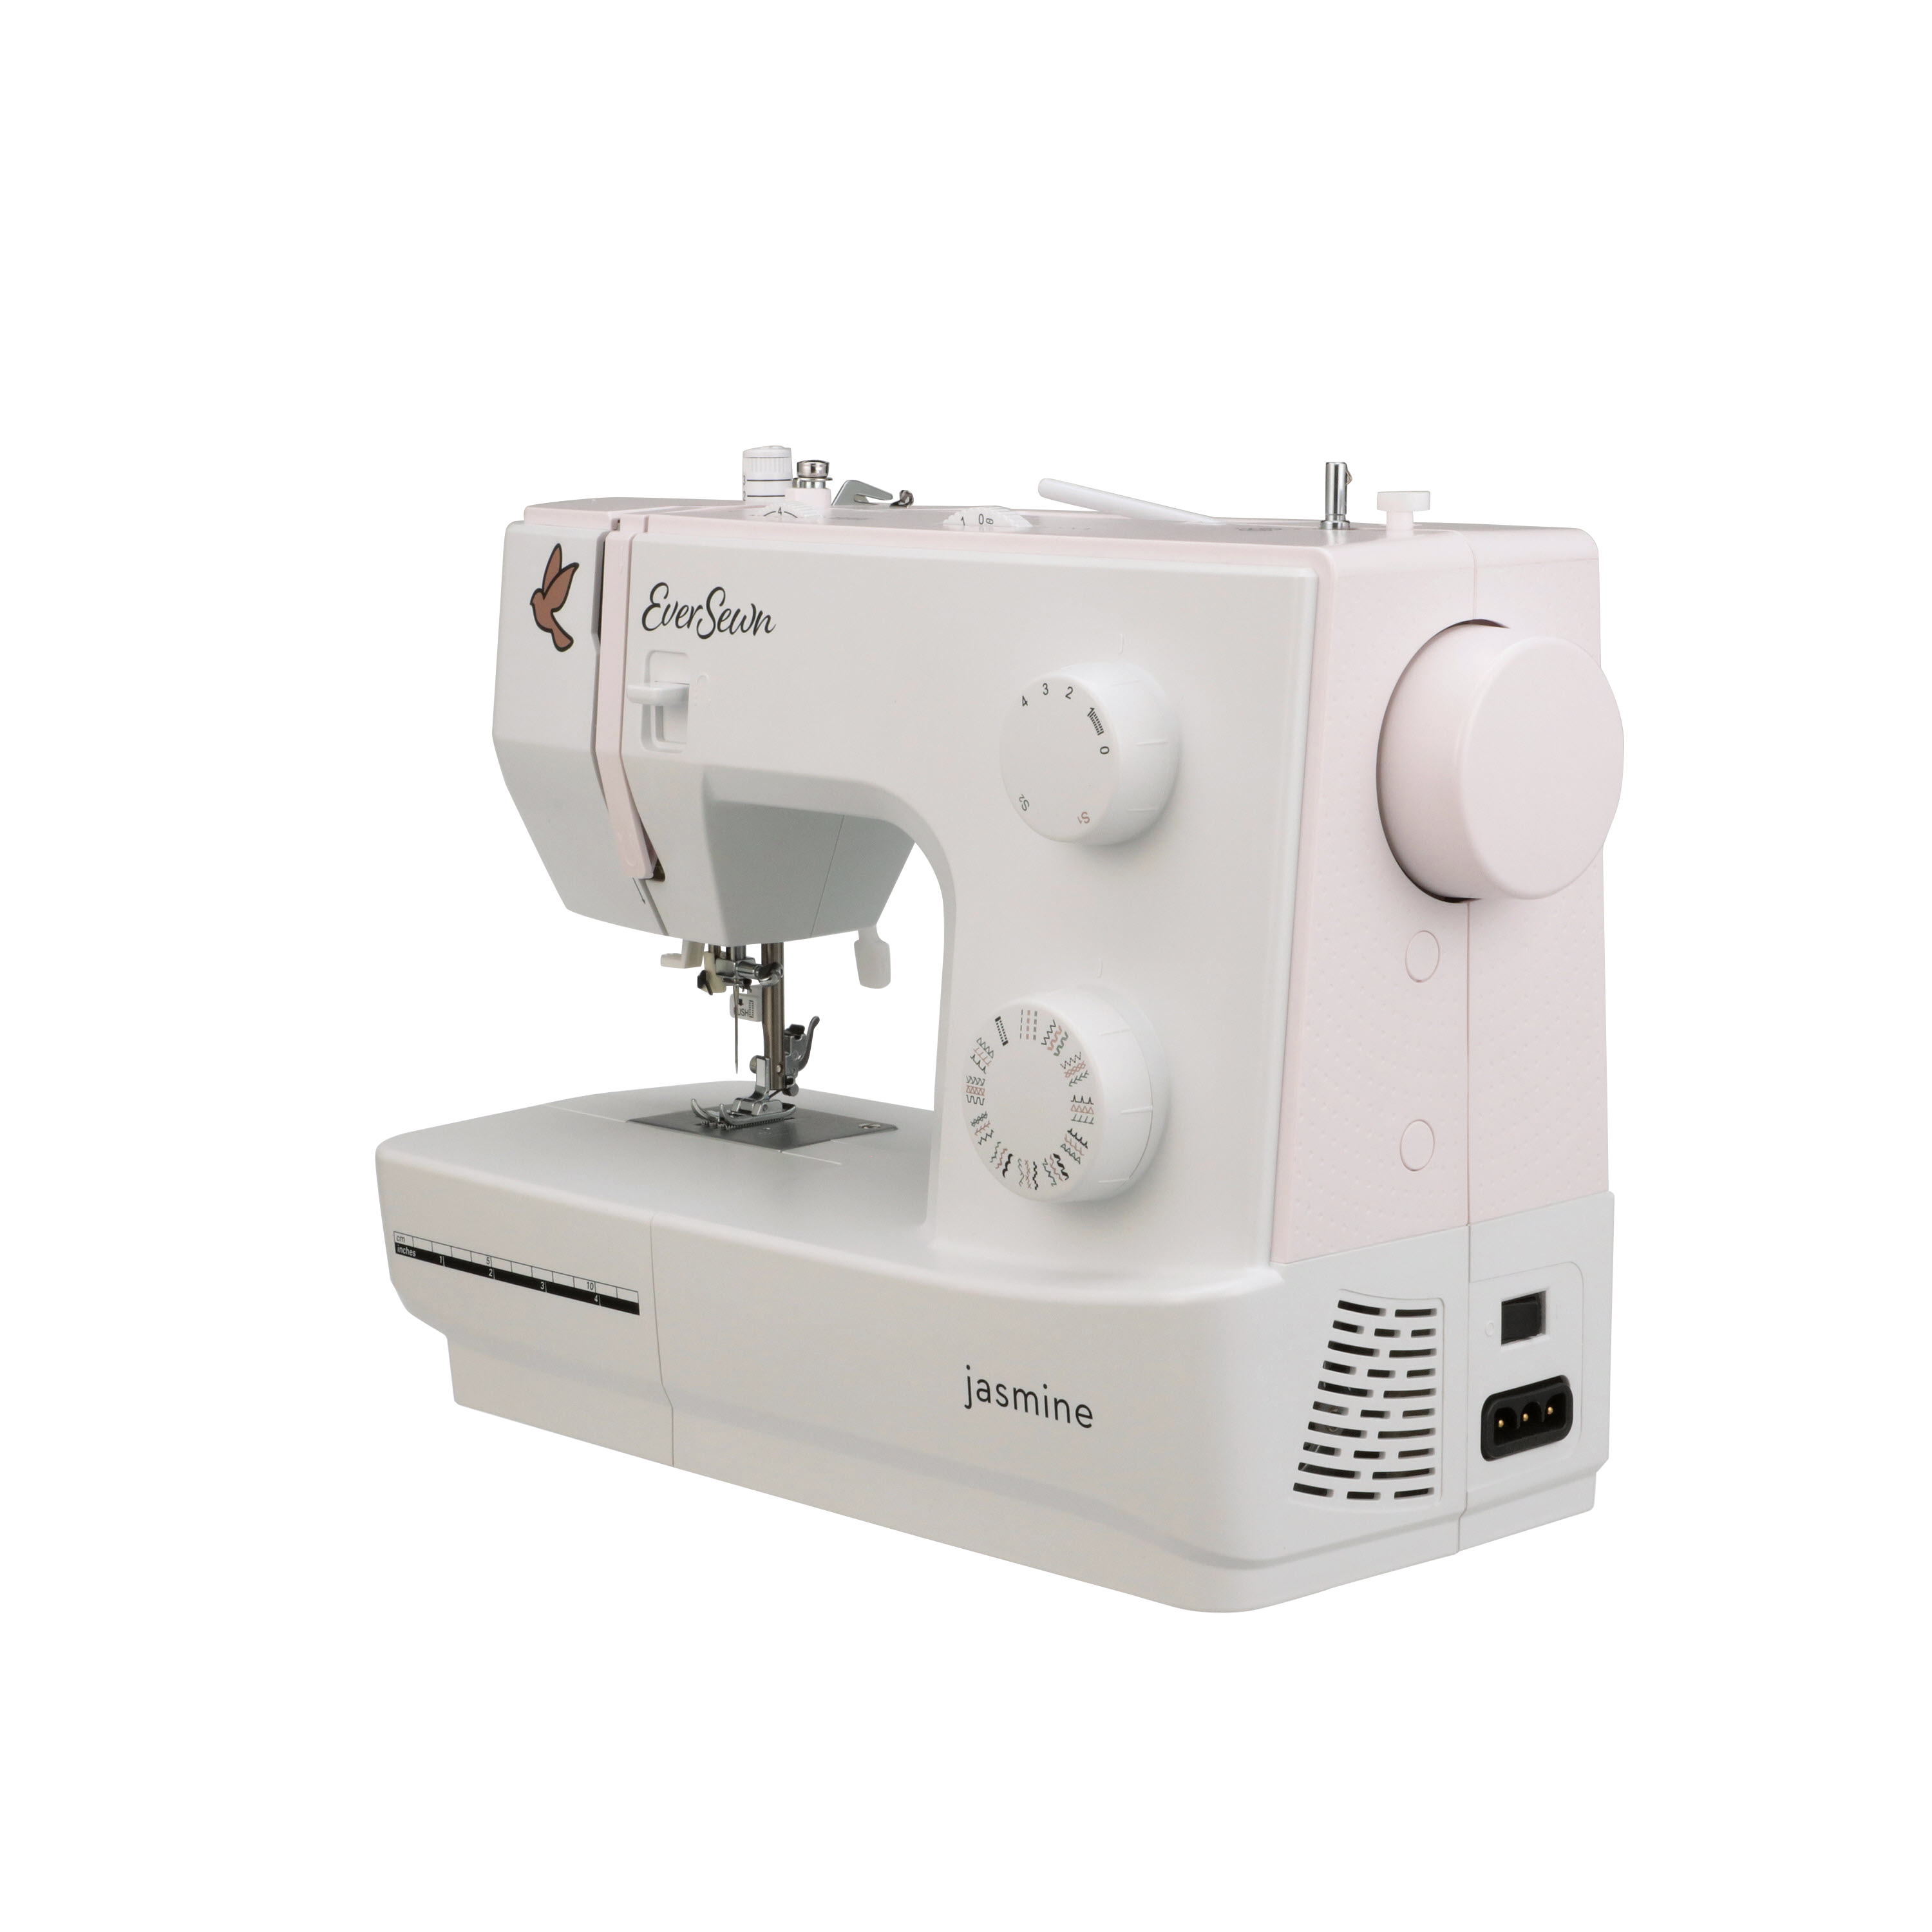 Bernette b05 Crafter Swiss Design Sewing Machine with $249 Bonus Bundle